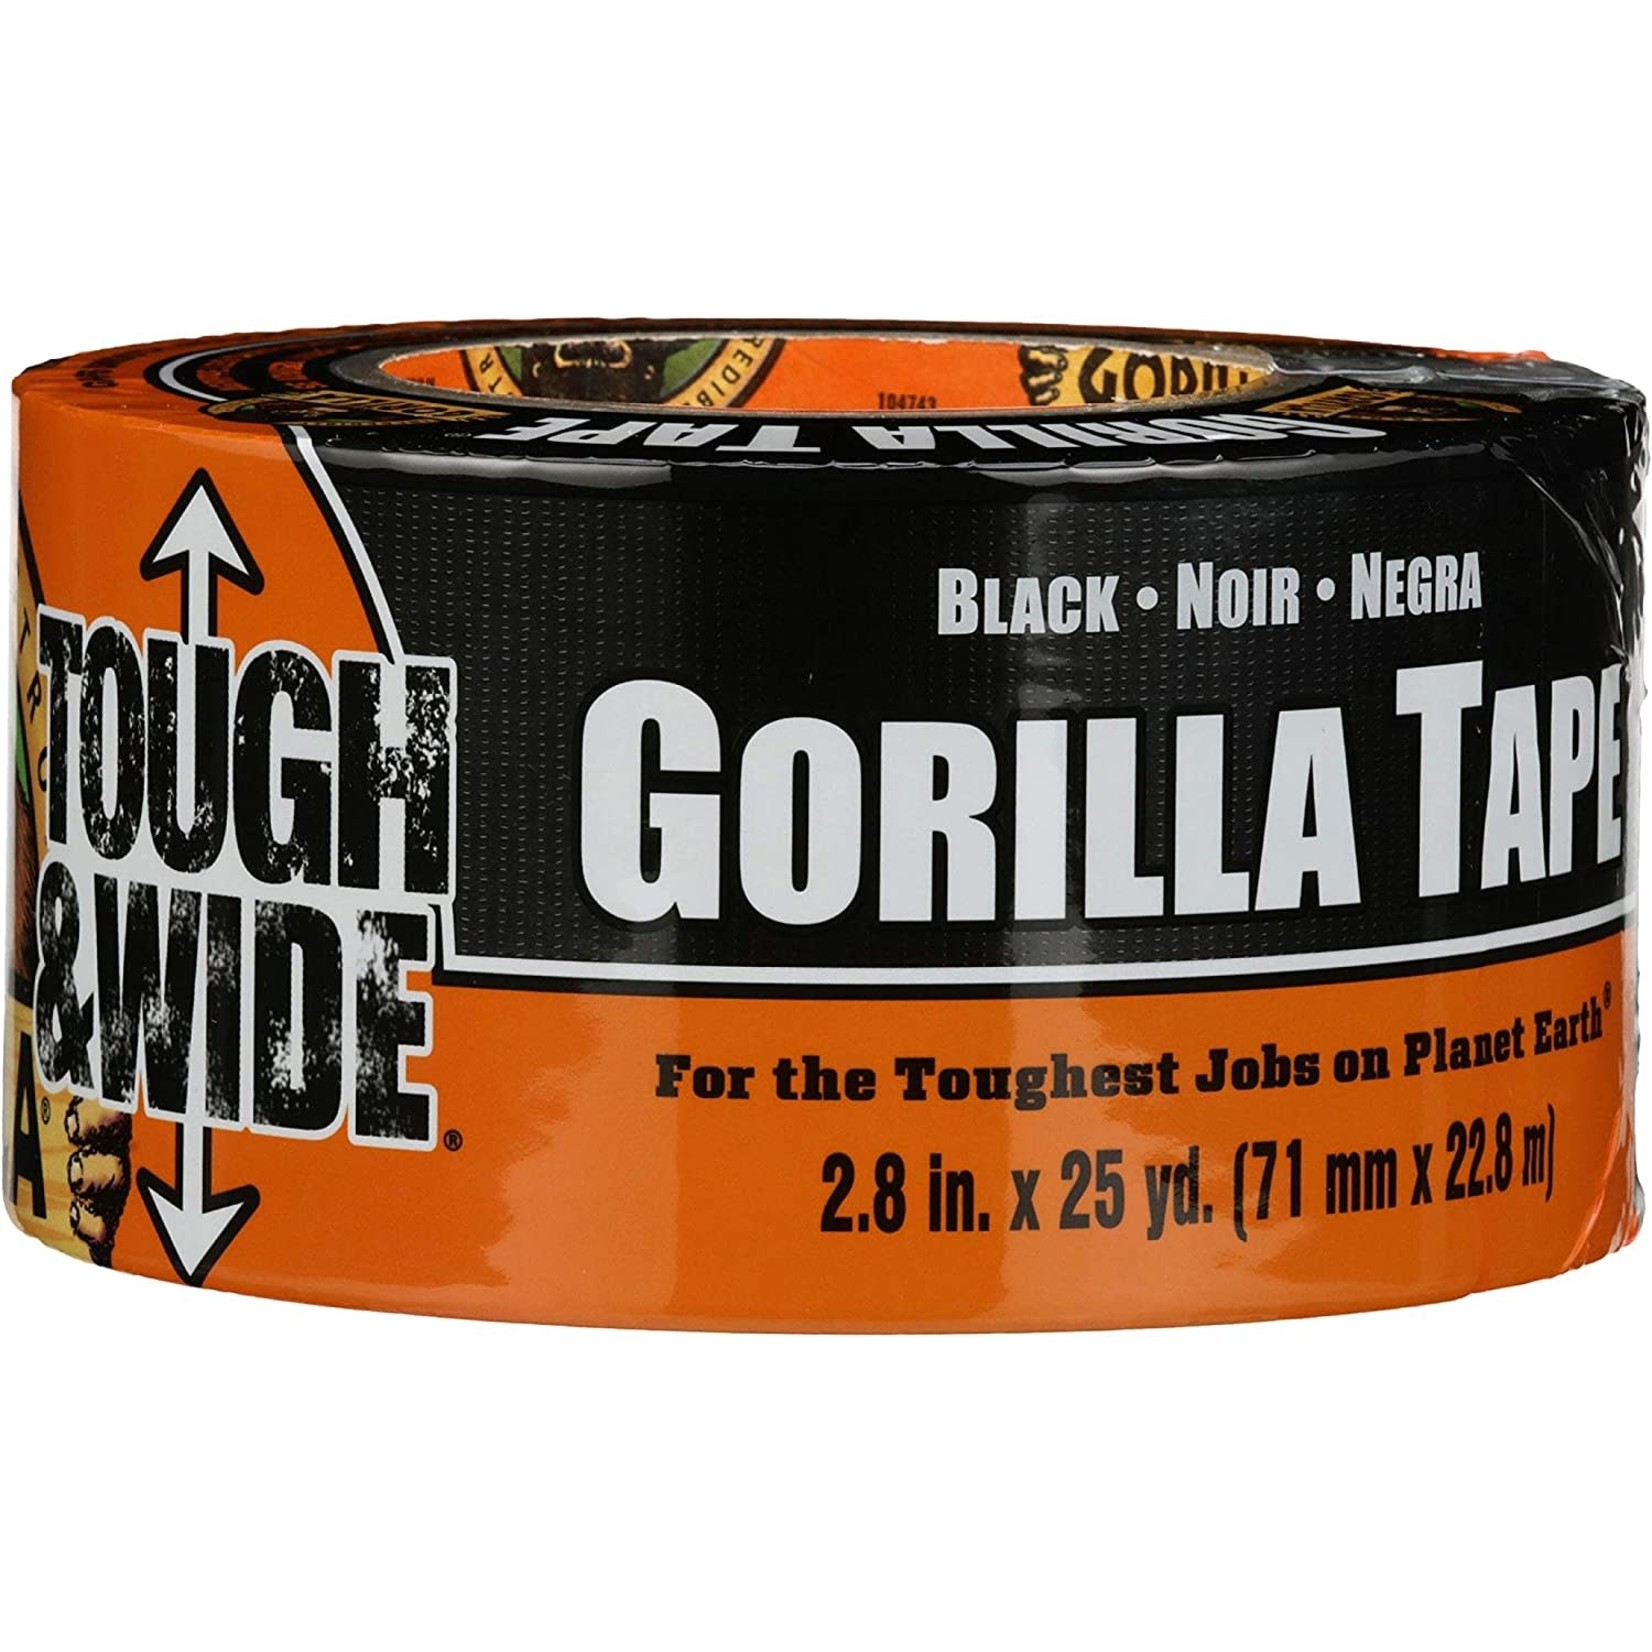 Gorilla TOUGH & WIDE 6025302 Duct Tape, 25 yd L, 2.88 in W